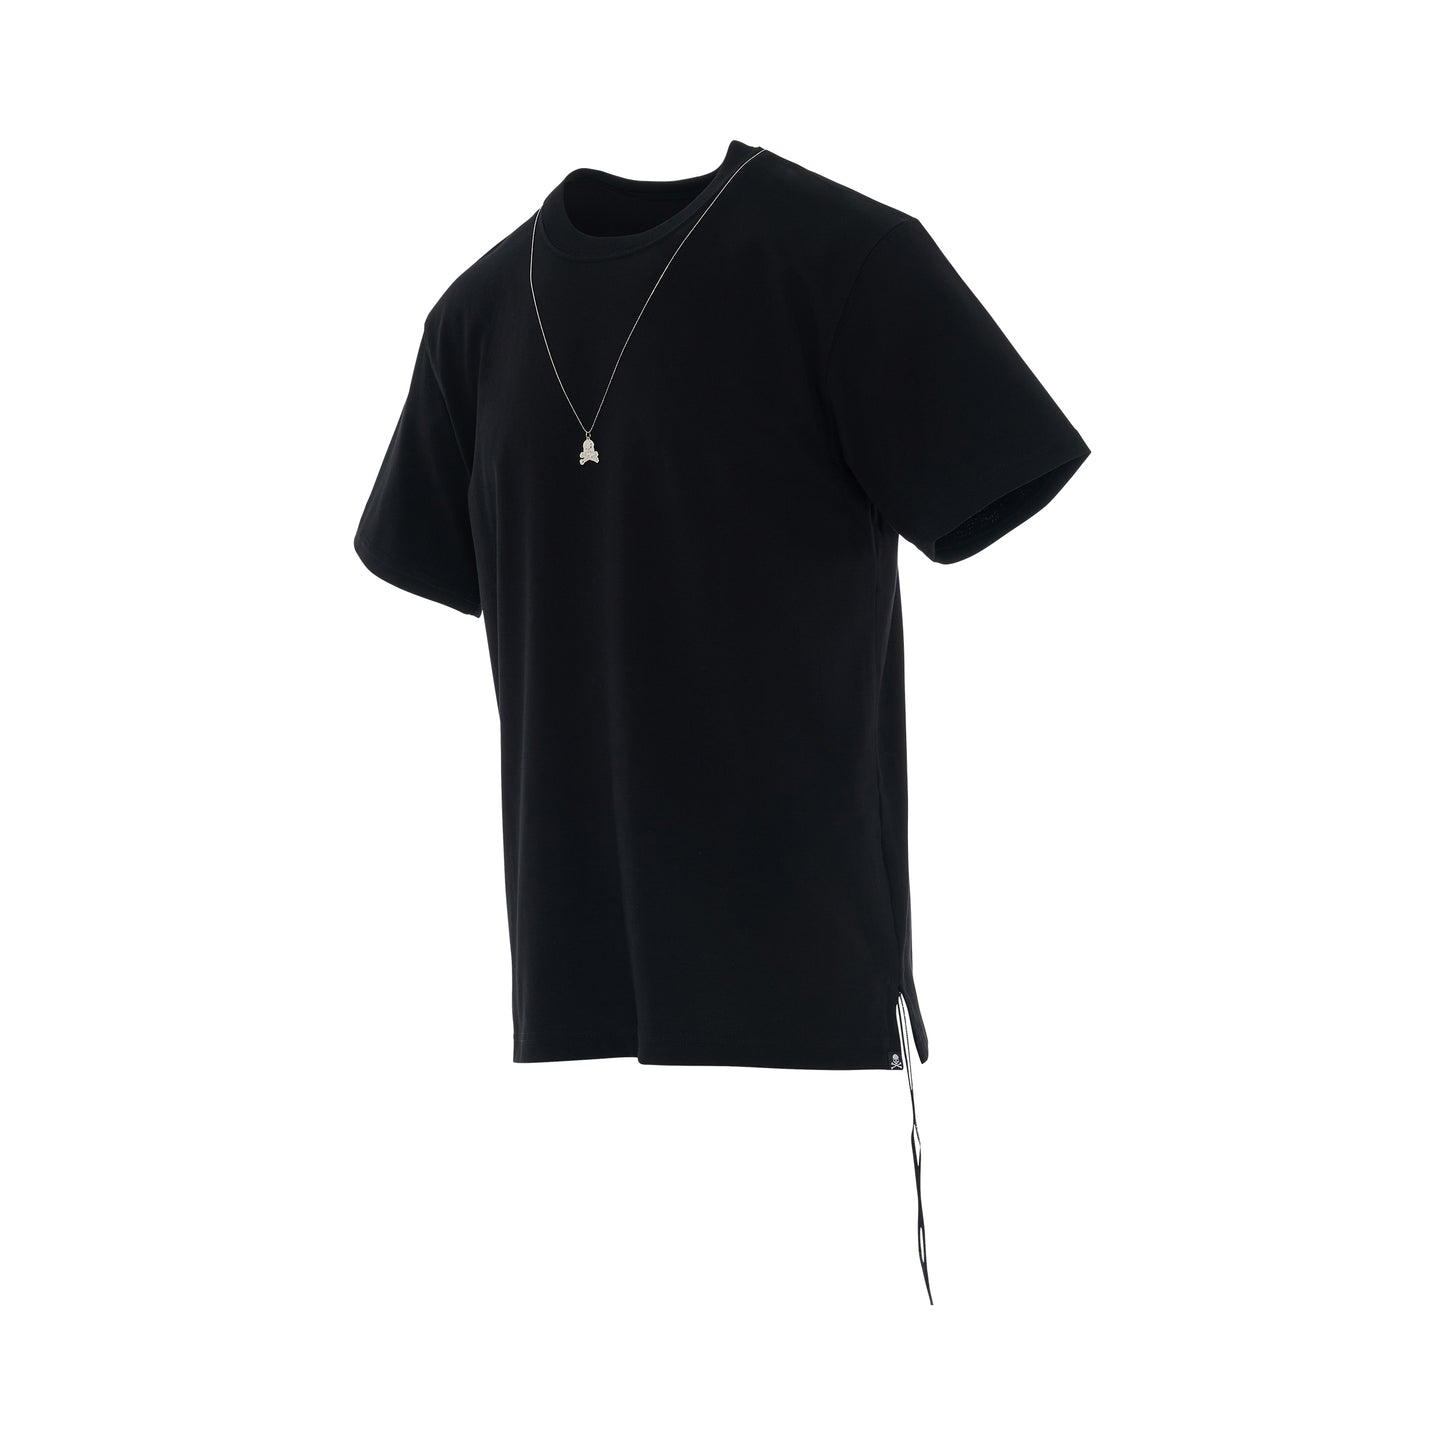 Skull Necklace T-Shirt in Black